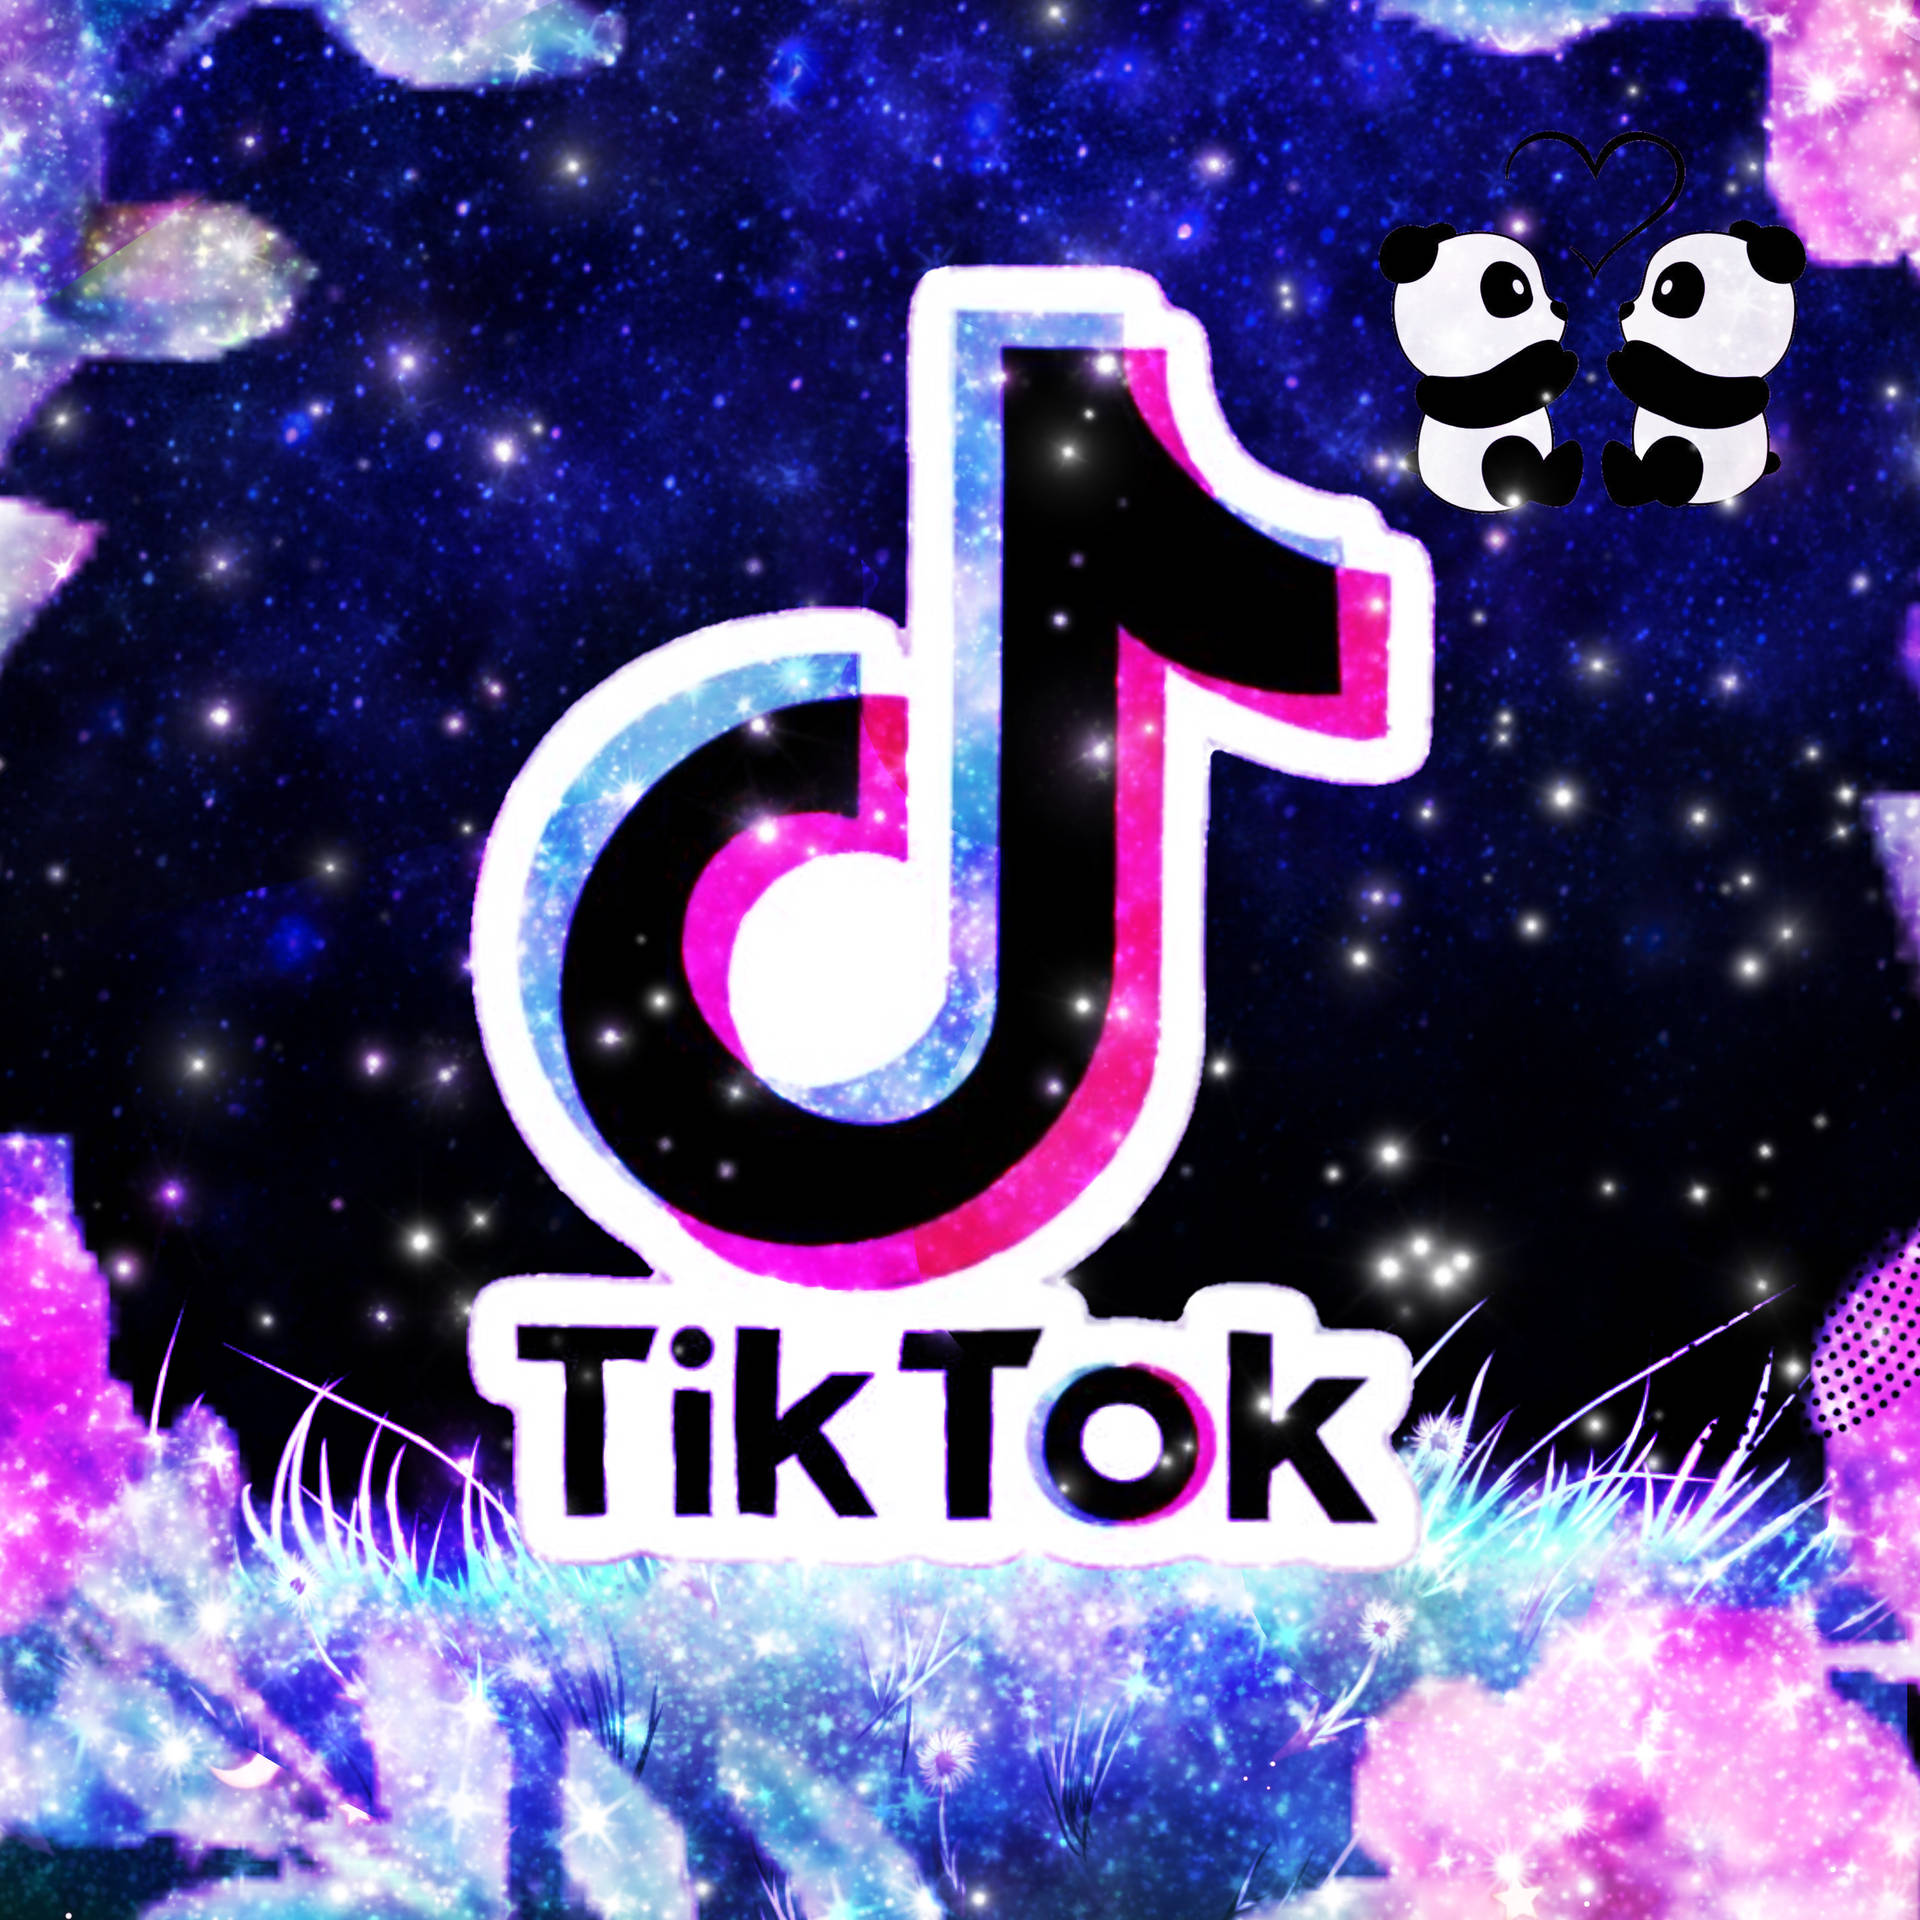 Tik Tok Wallpapers - Top 30 Best Tik Tok Wallpapers Download